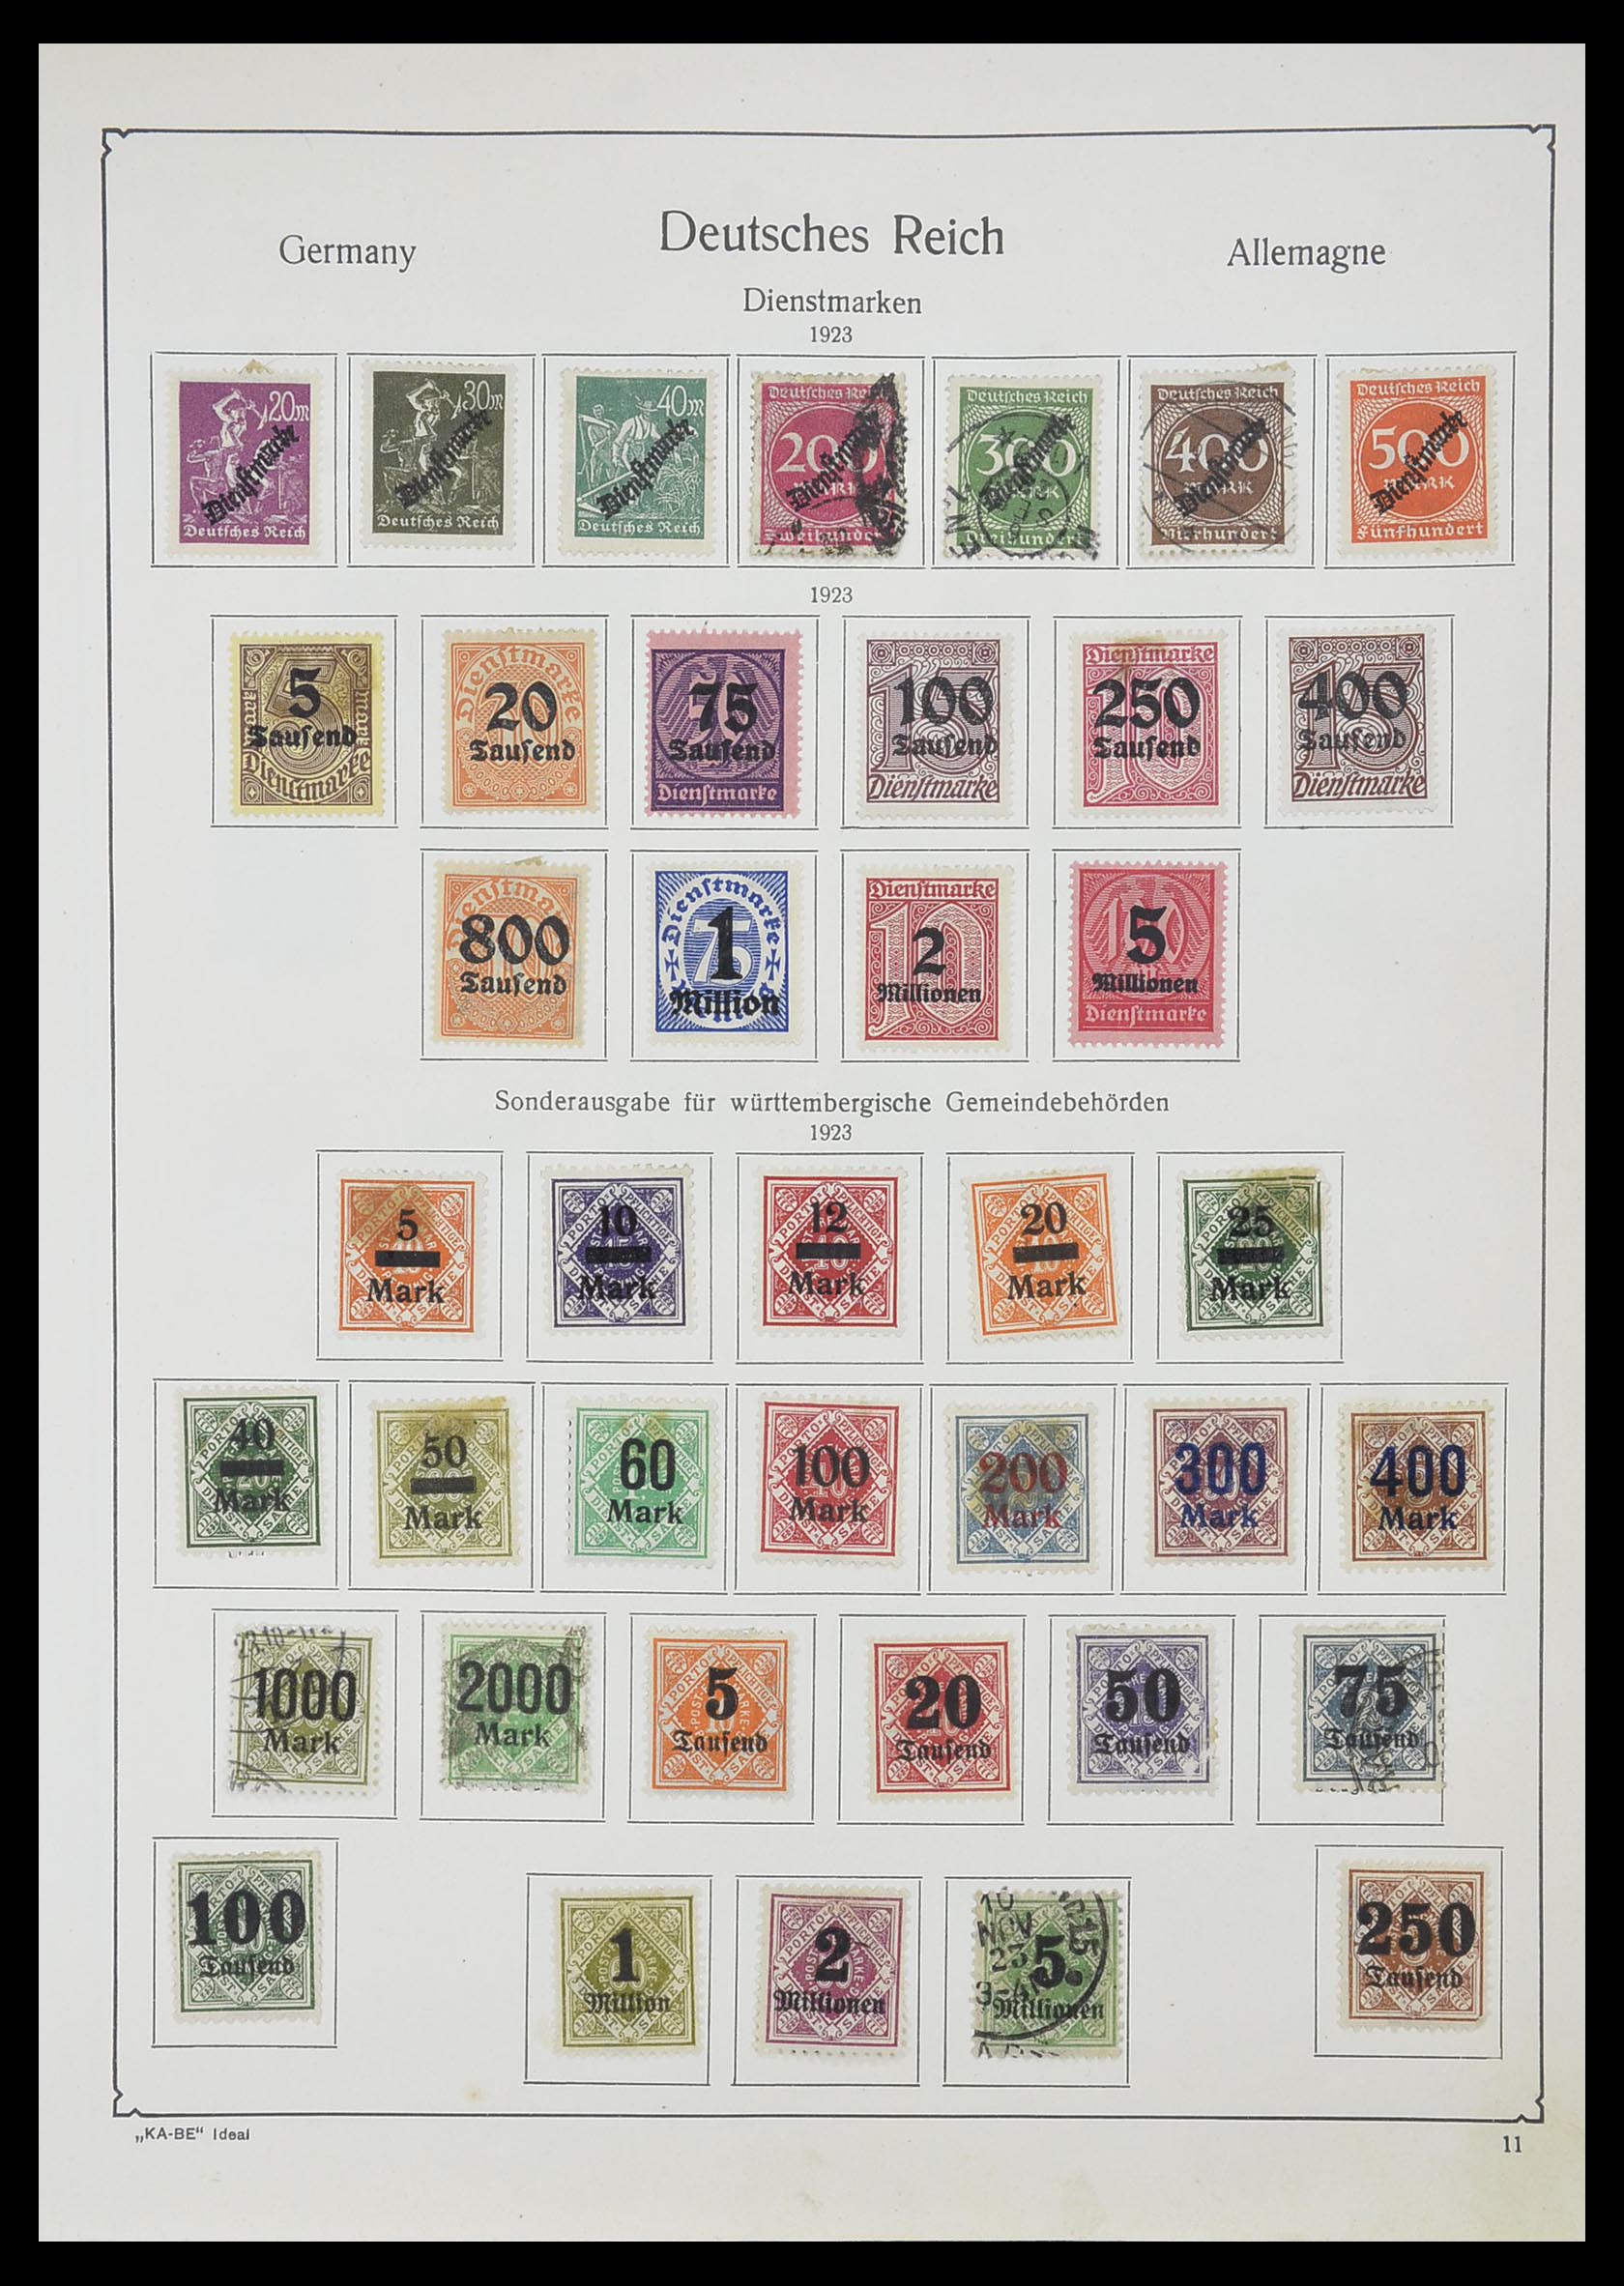 33359 016 - Stamp collection 33359 German Reich 1872-1945.